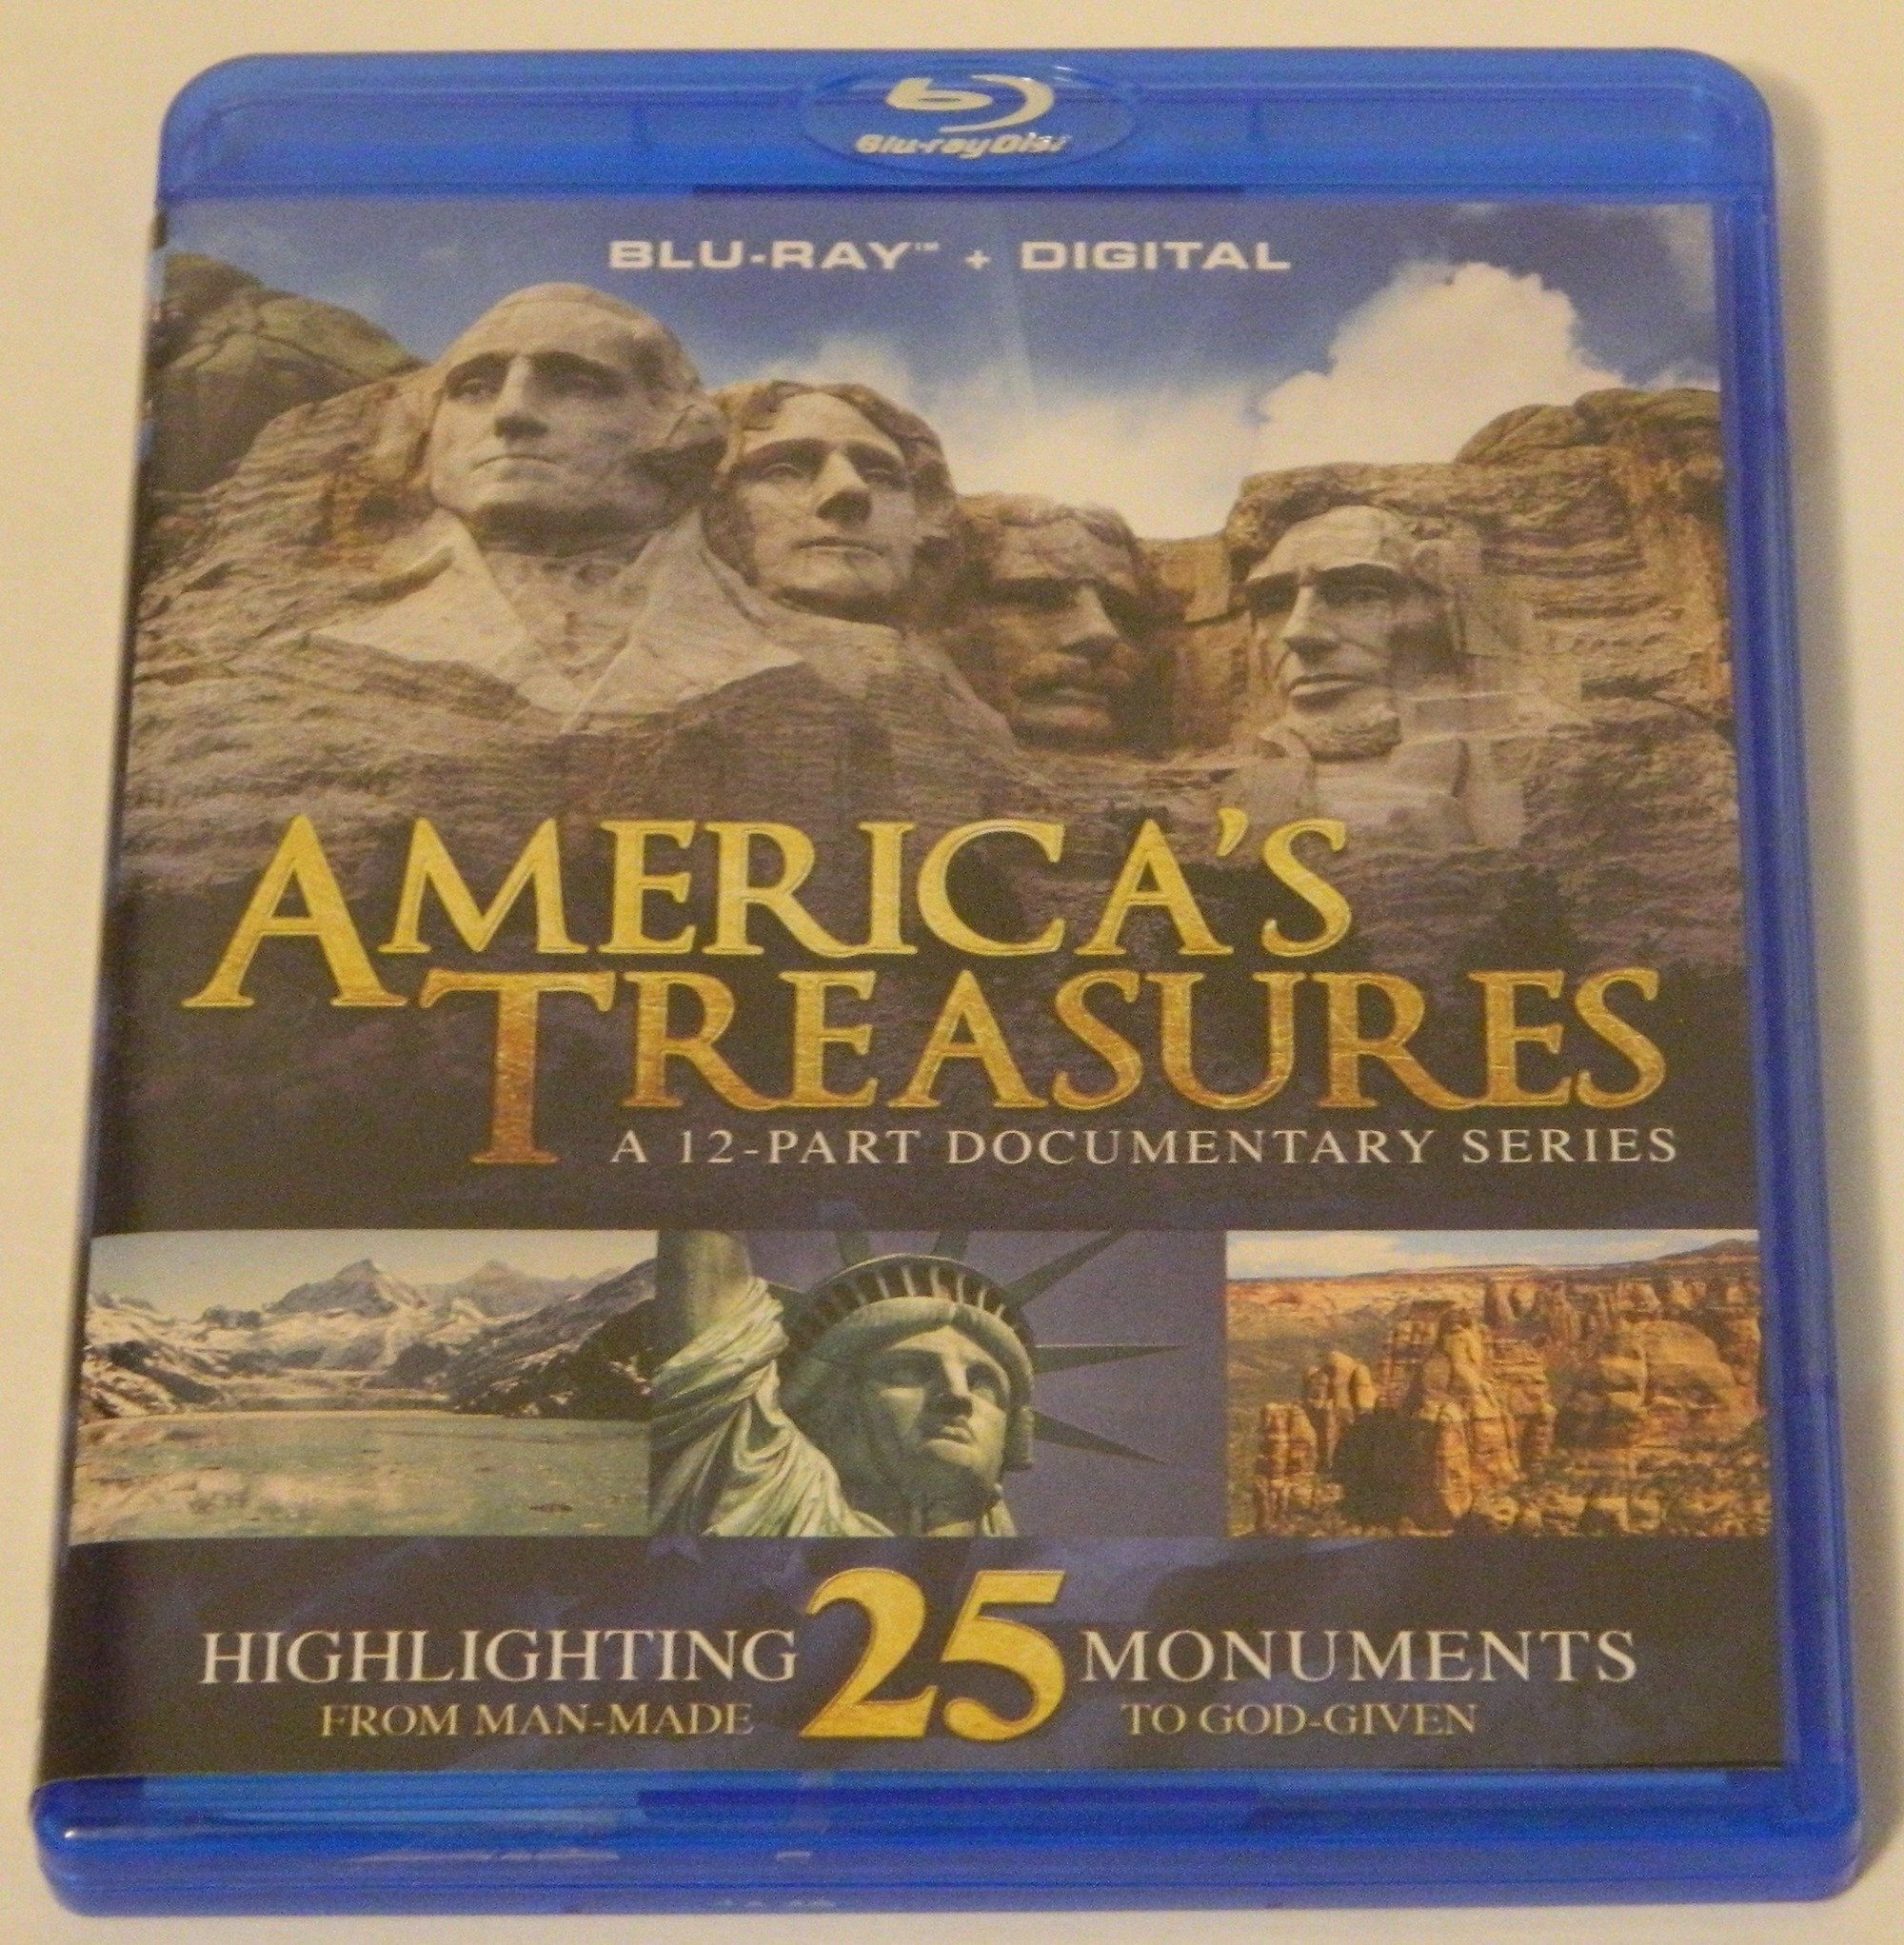 America’s Treasures Blu-ray Review